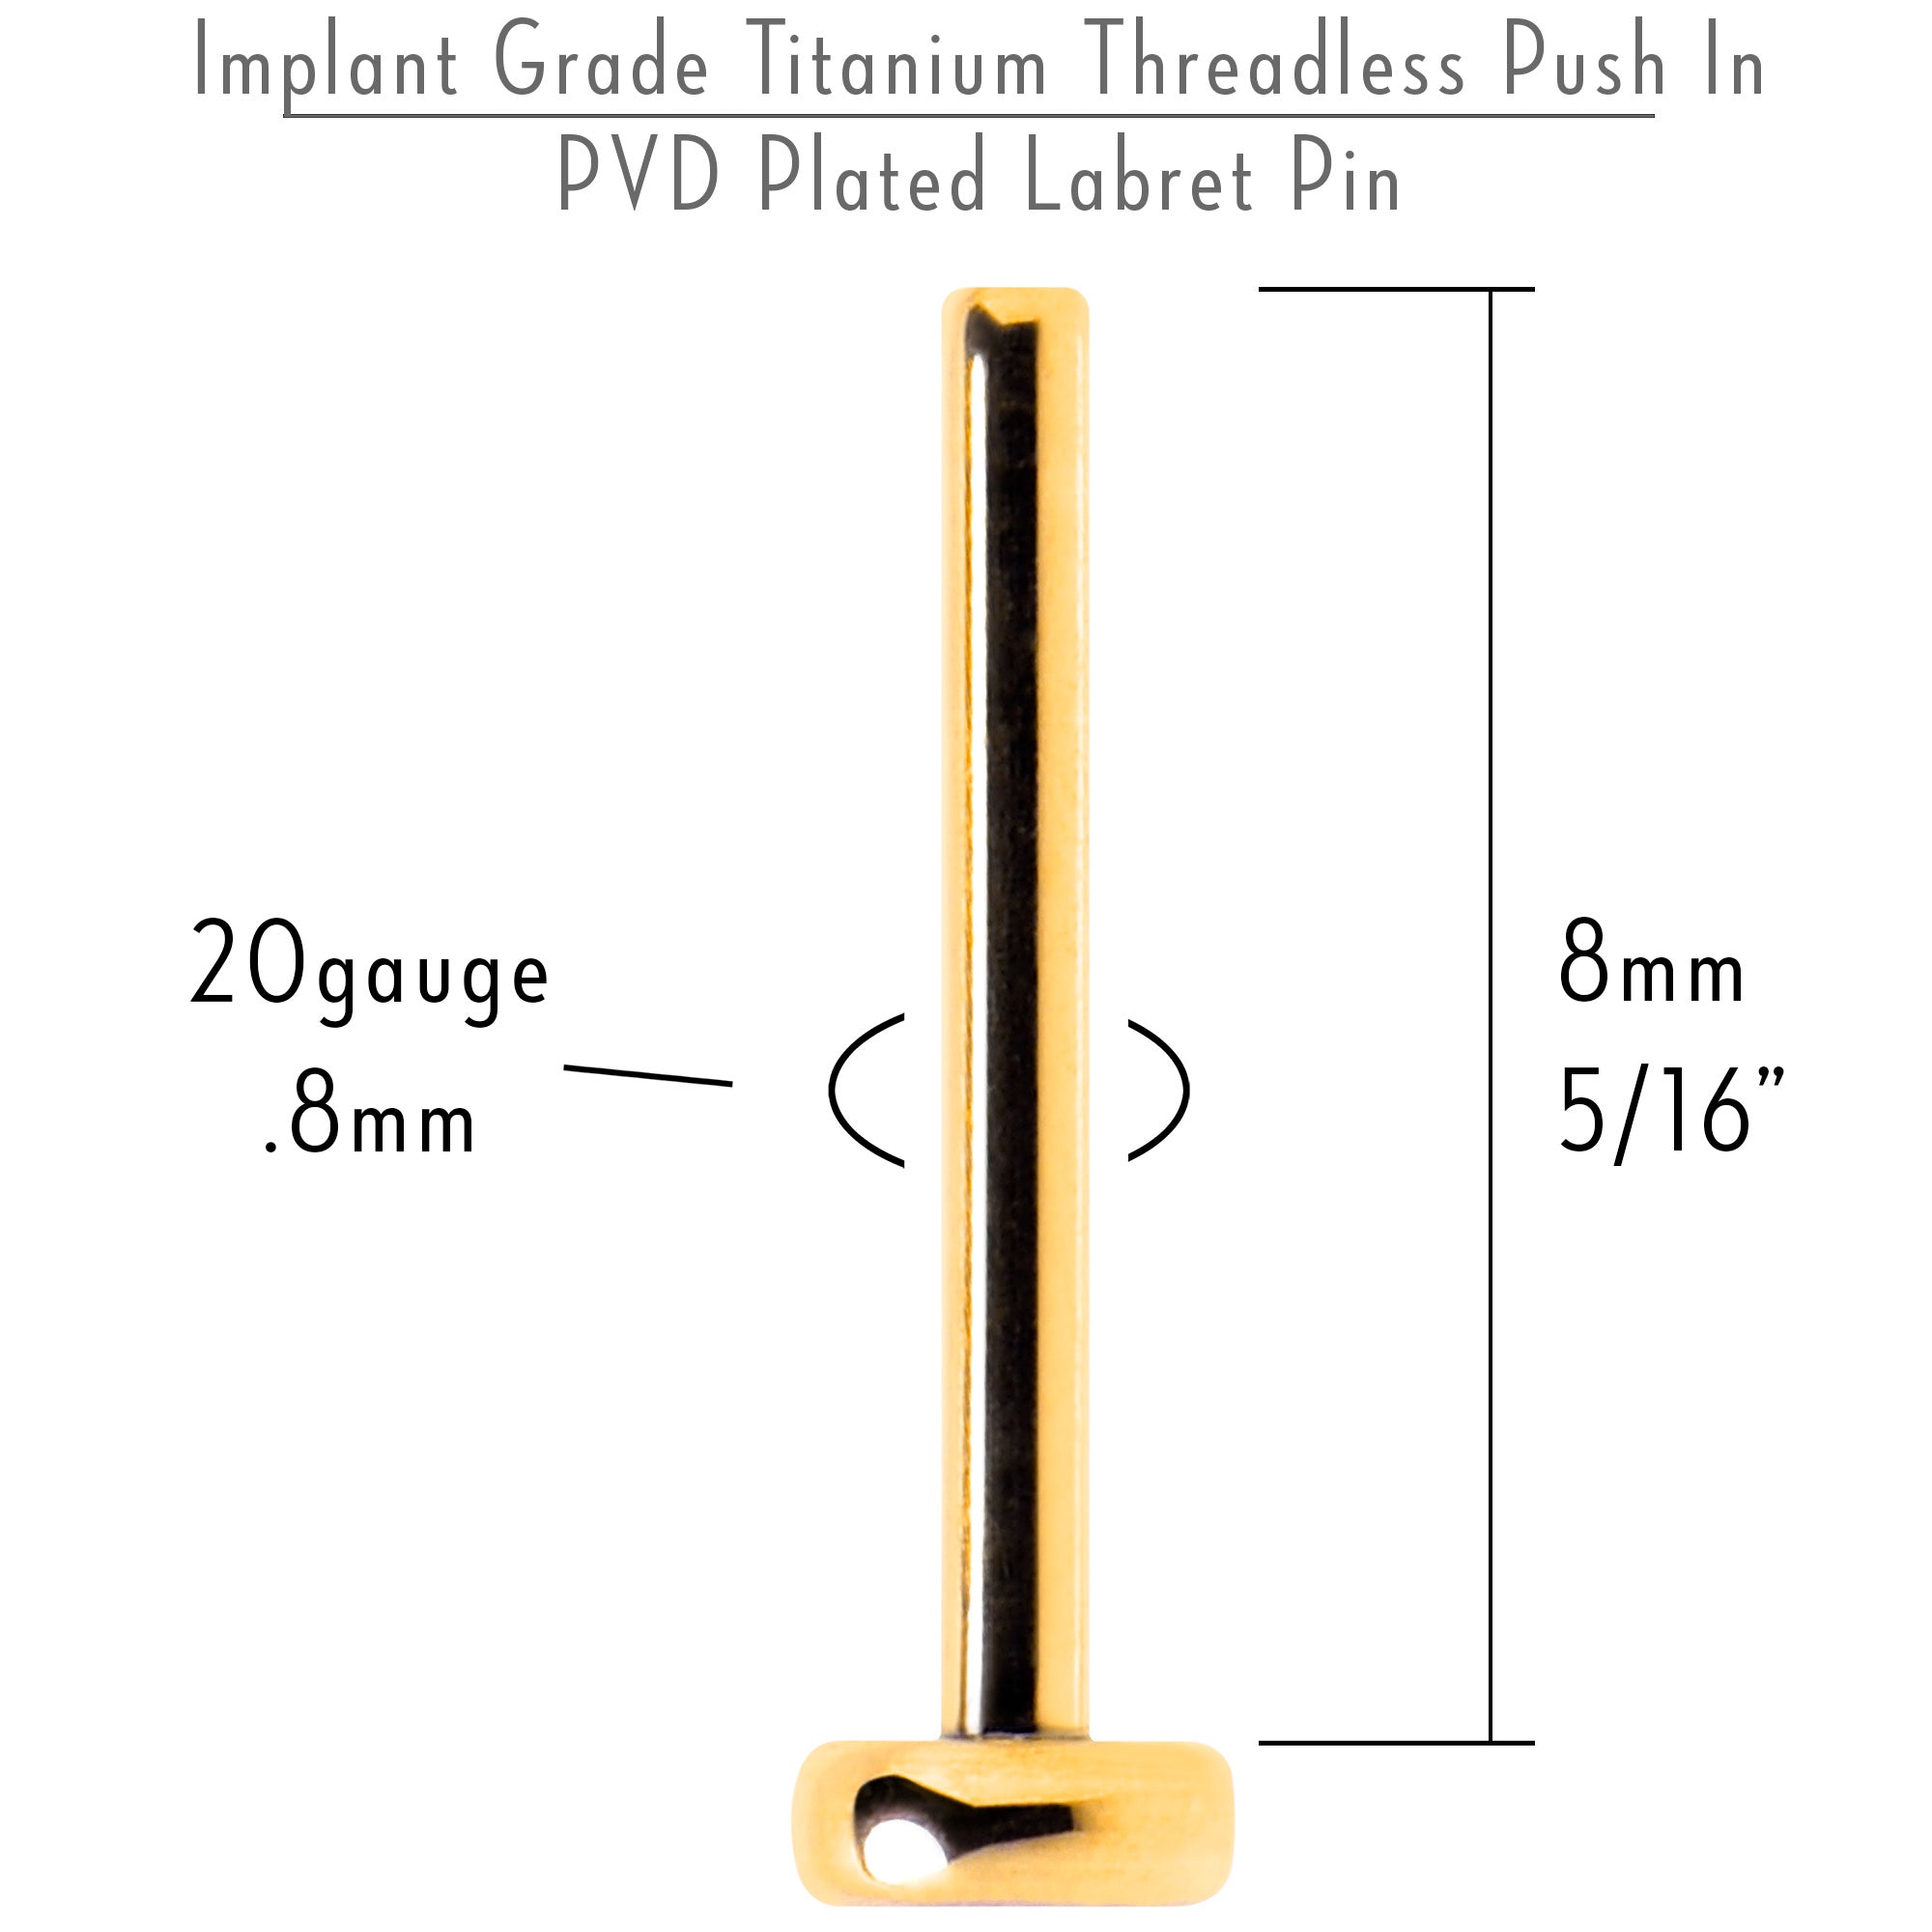 20 Gauge 5/16 Gold Hue ASTM F-136 Implant Grade Titanium Threadless Post Only Labret